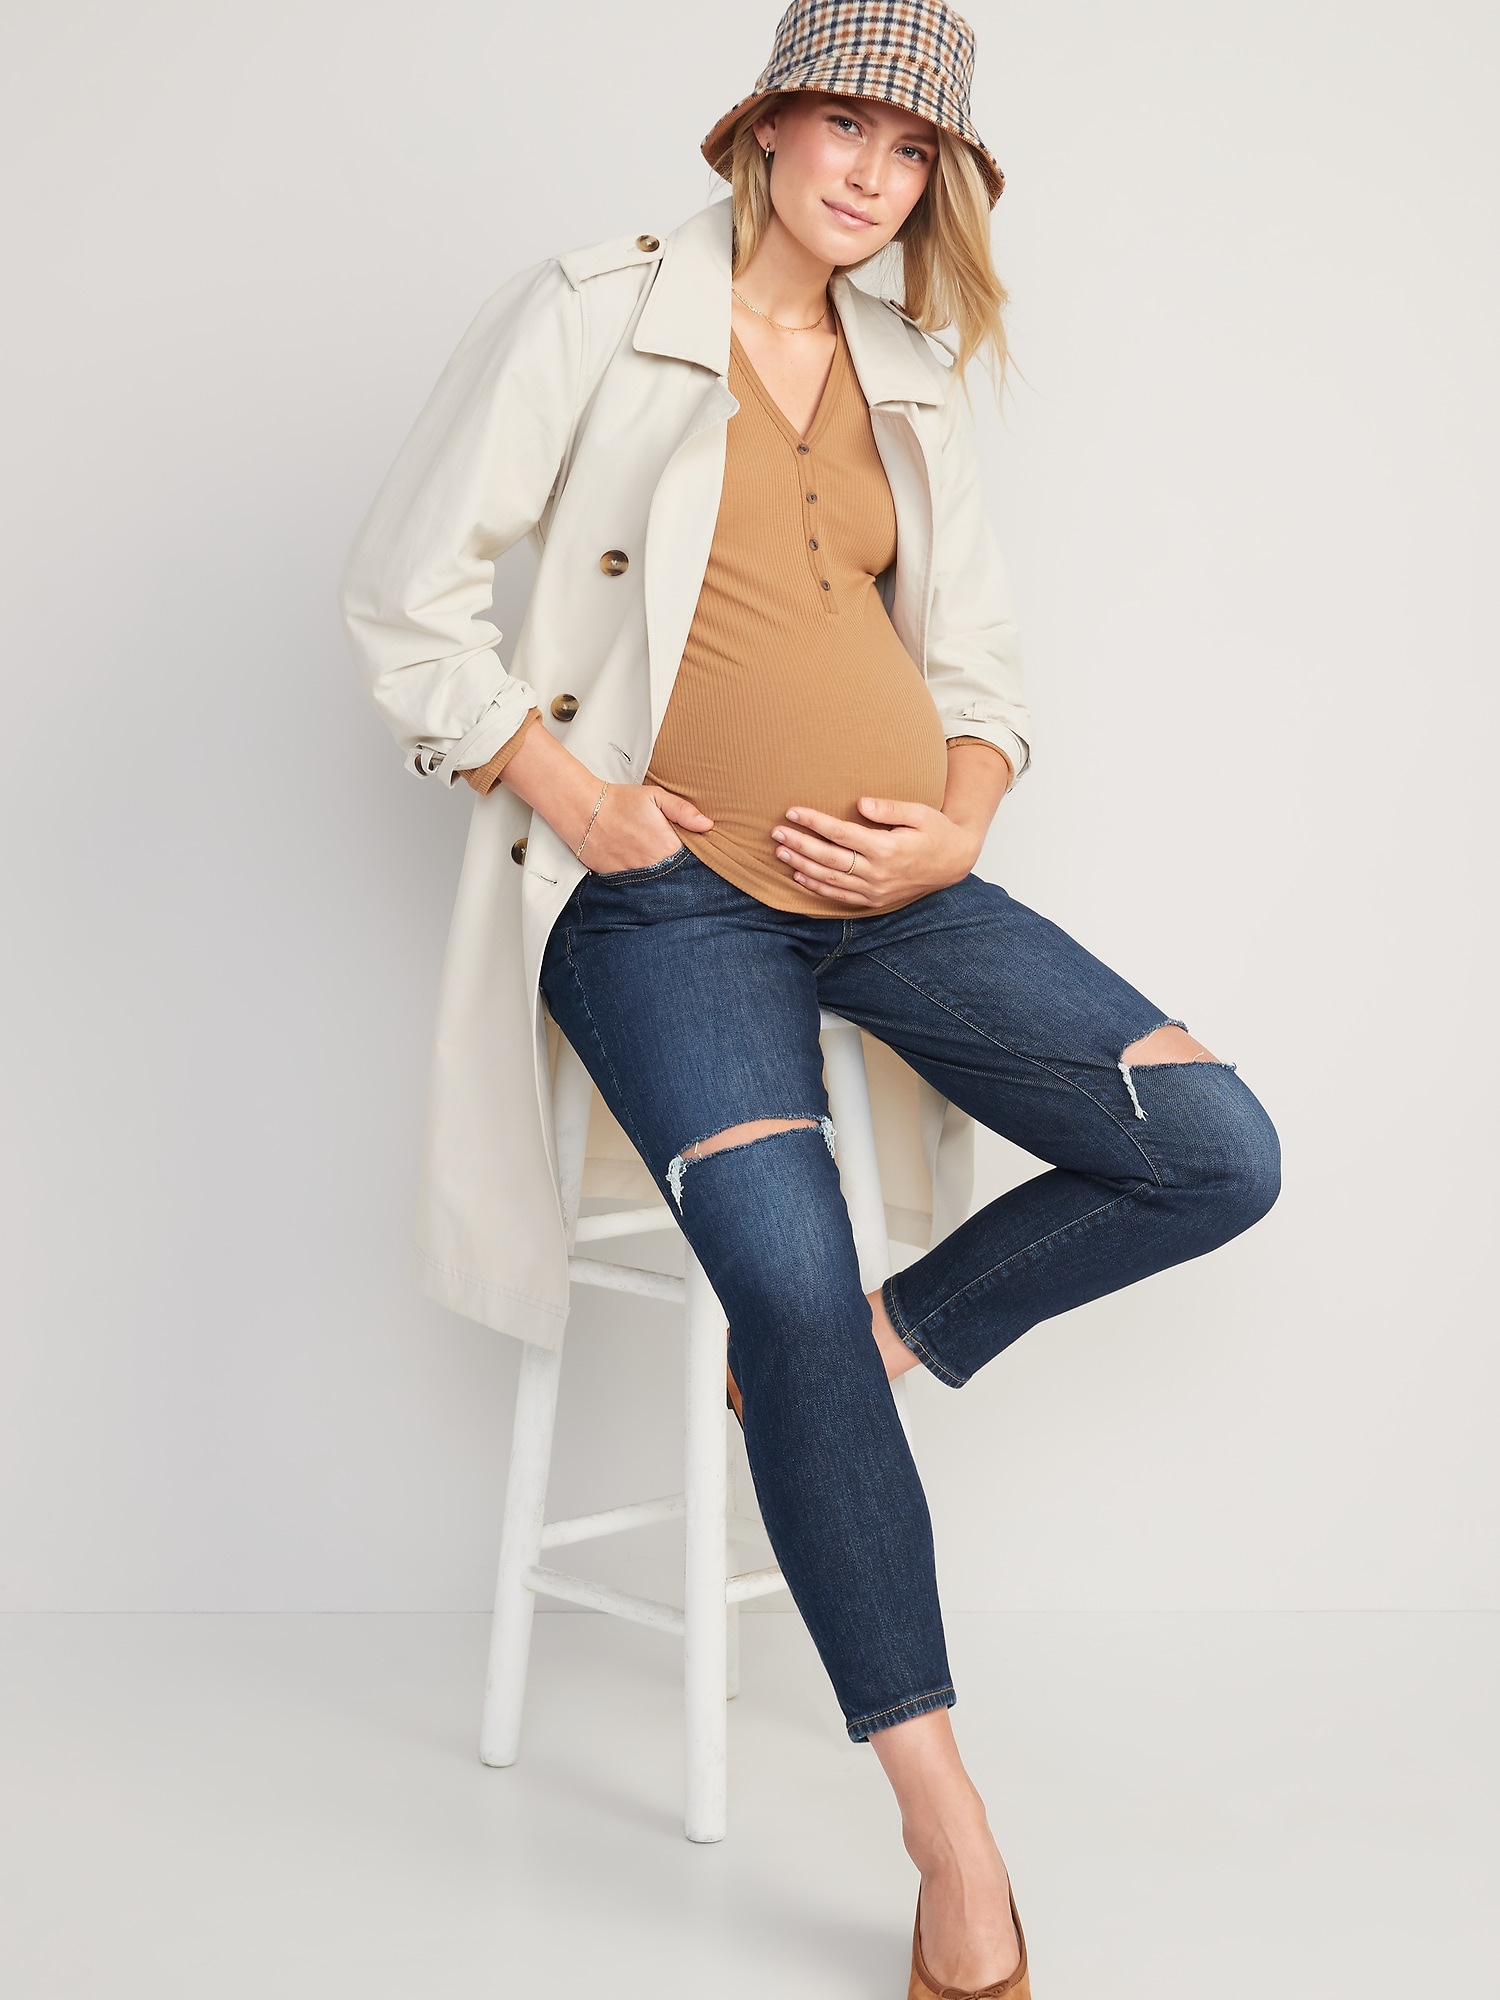 Best Maternity Jeans - Maternity Jean Brands